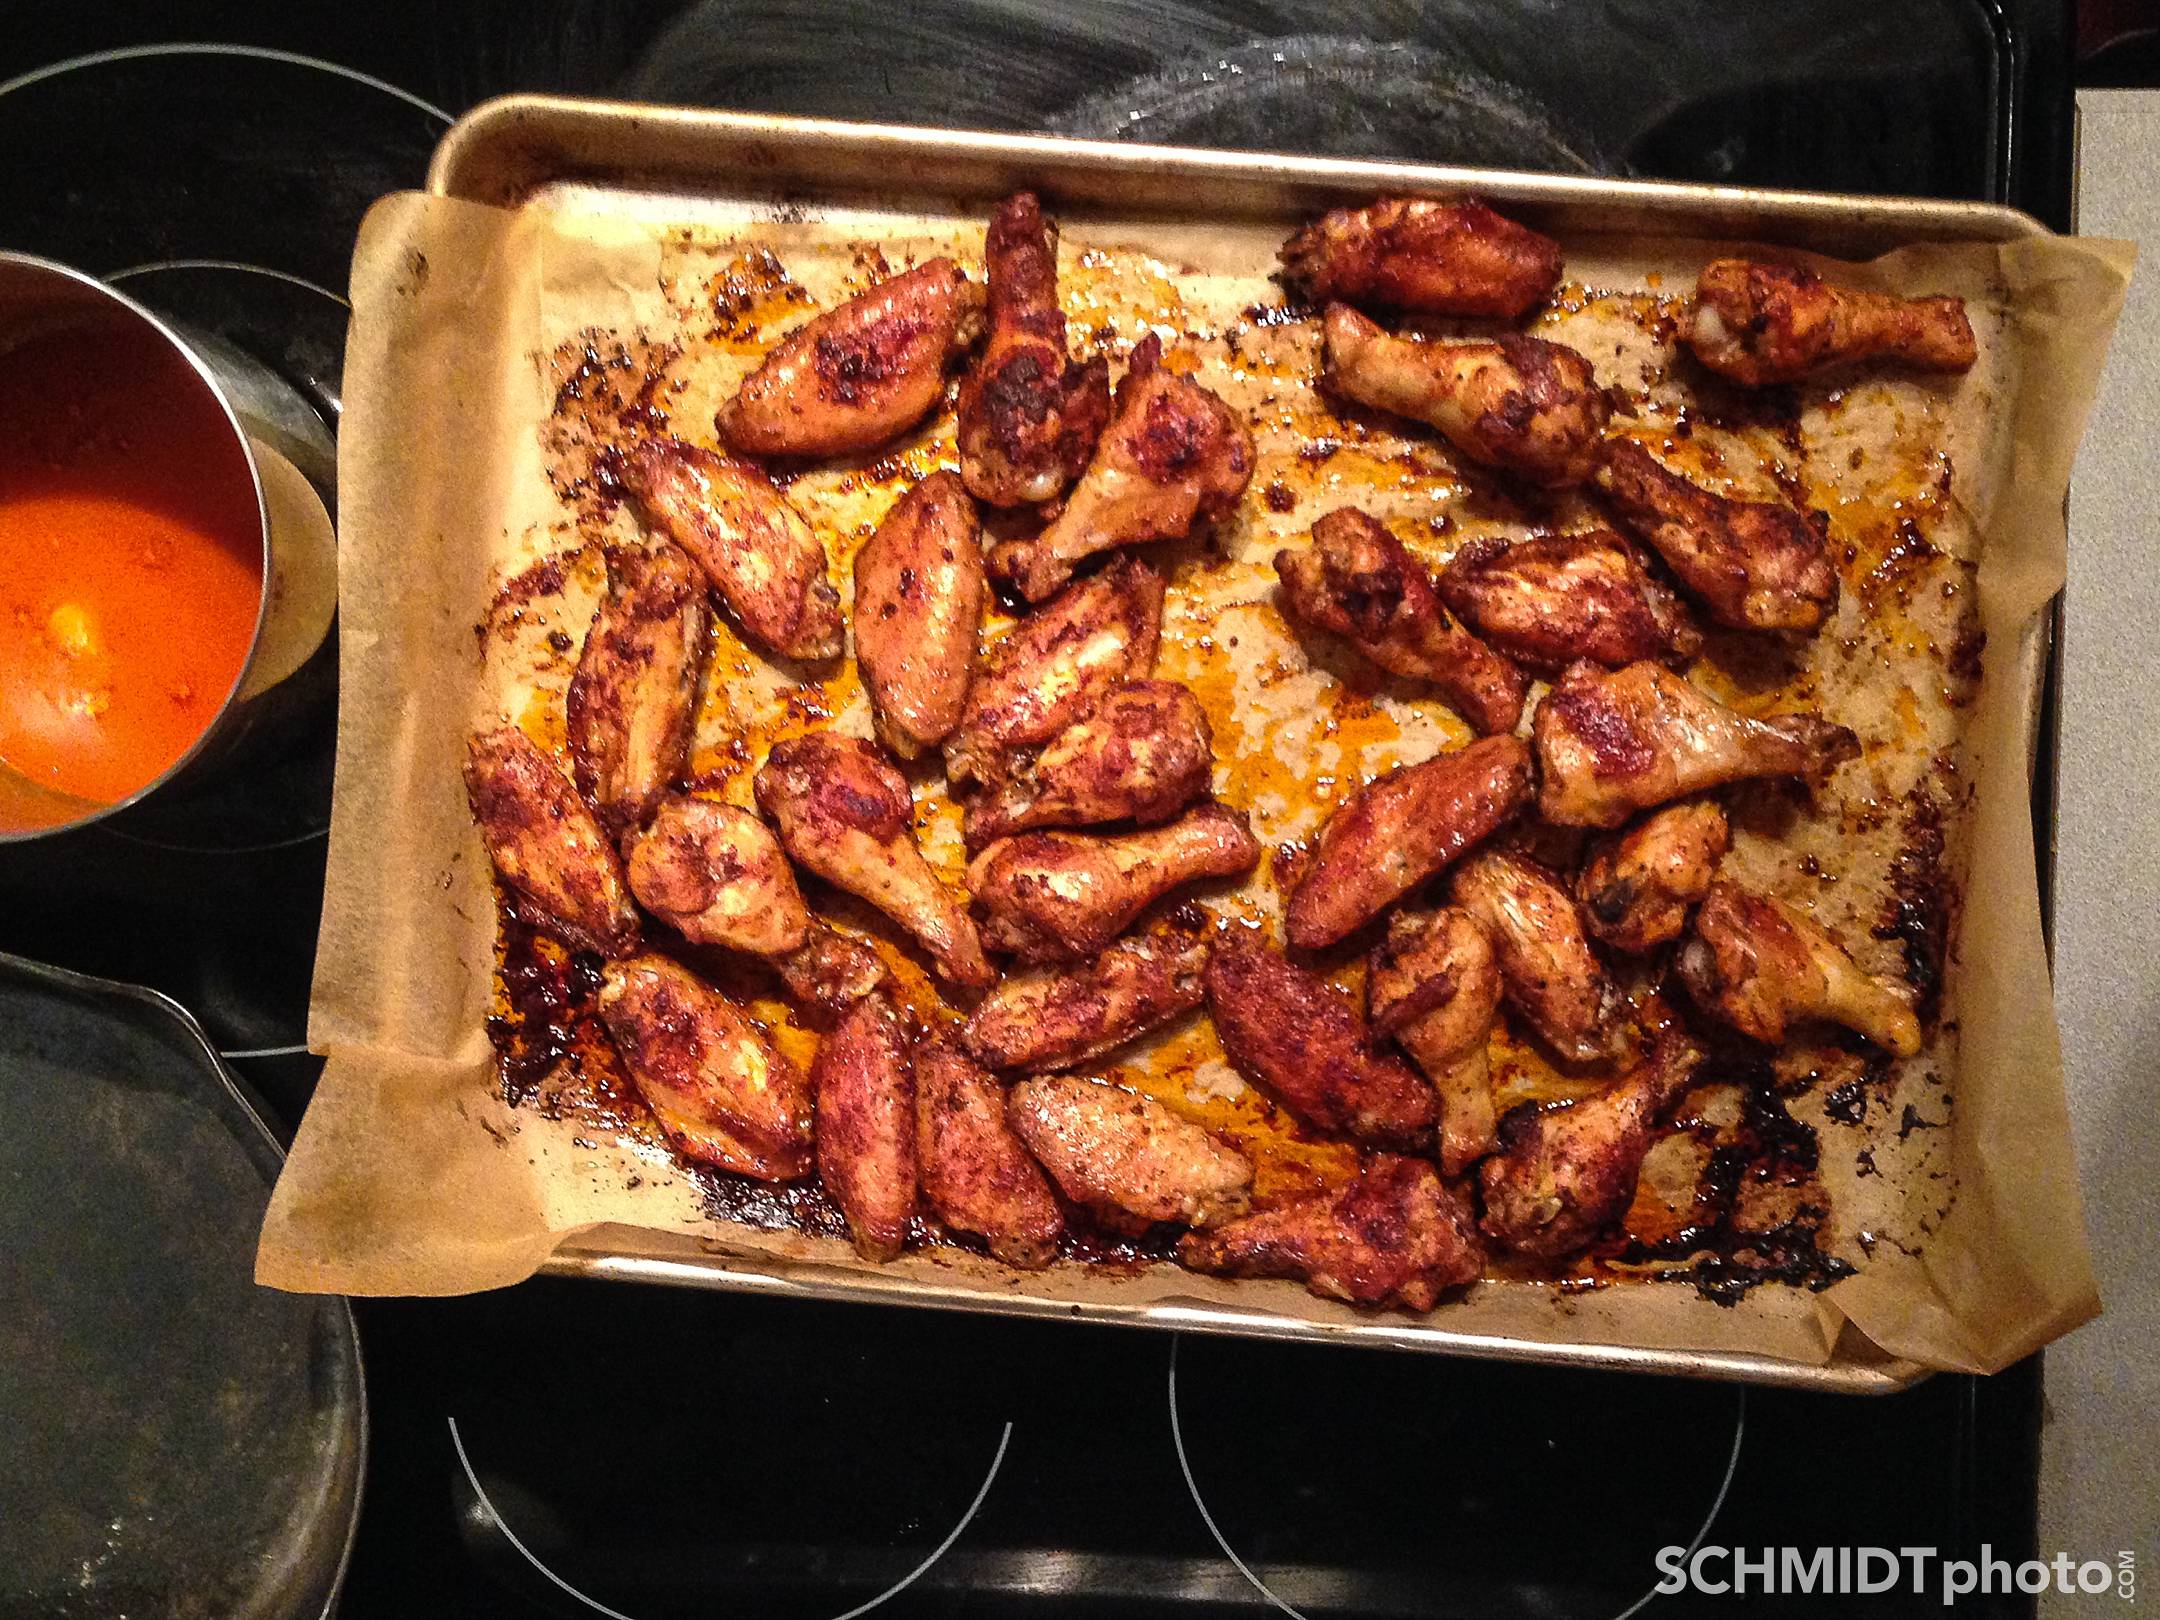 Hot wings chicken oven roasted tom schmidt photo